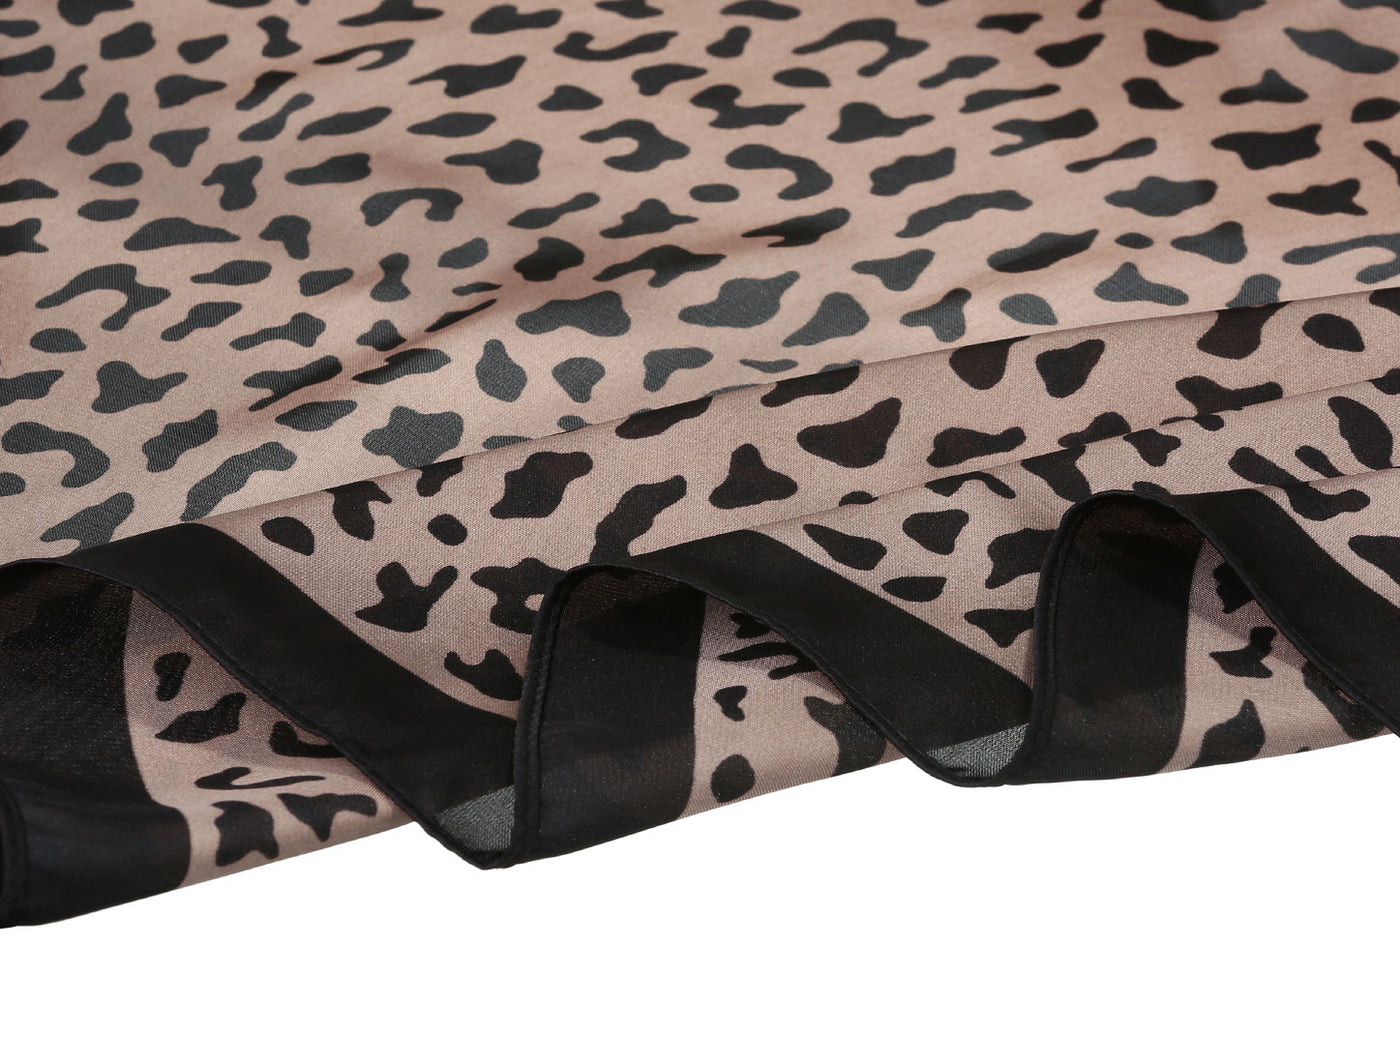 Allegra K 70cm Animal Leopard Print Silk Square Scarf Kerchief Bandana